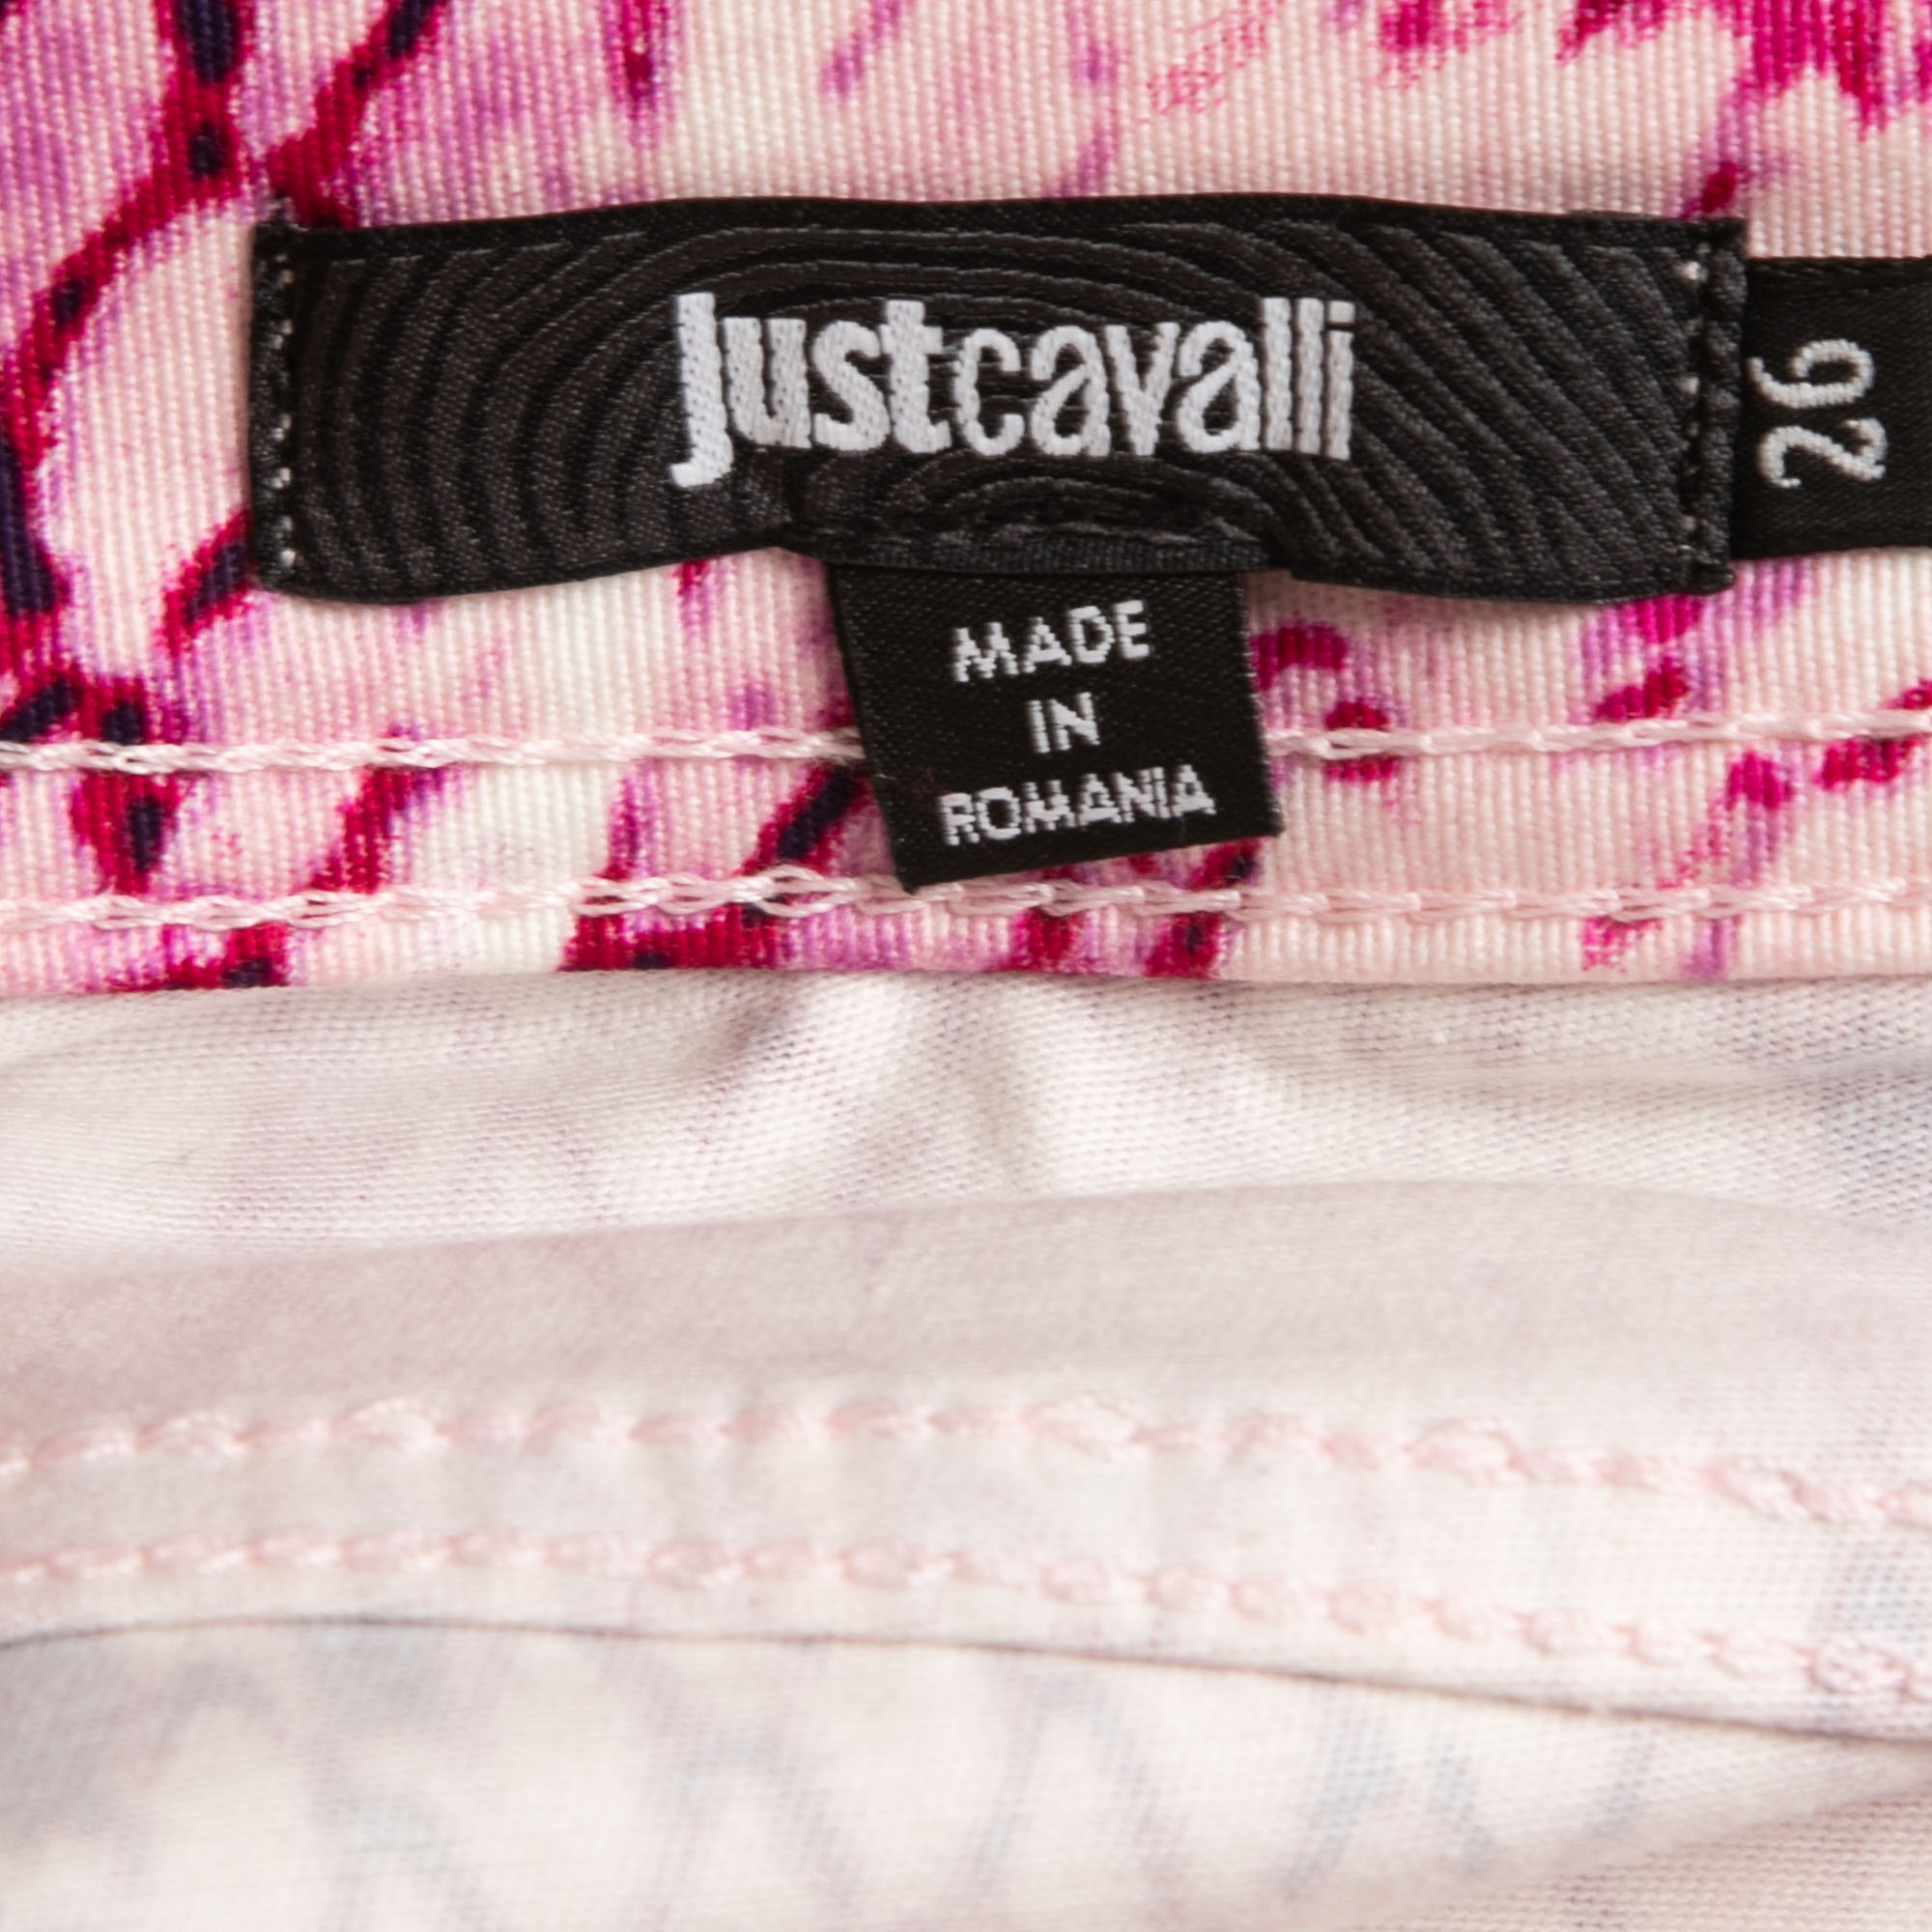 Just Cavalli Pink Snake Printed Denim Skinny Jeans S Waist 26